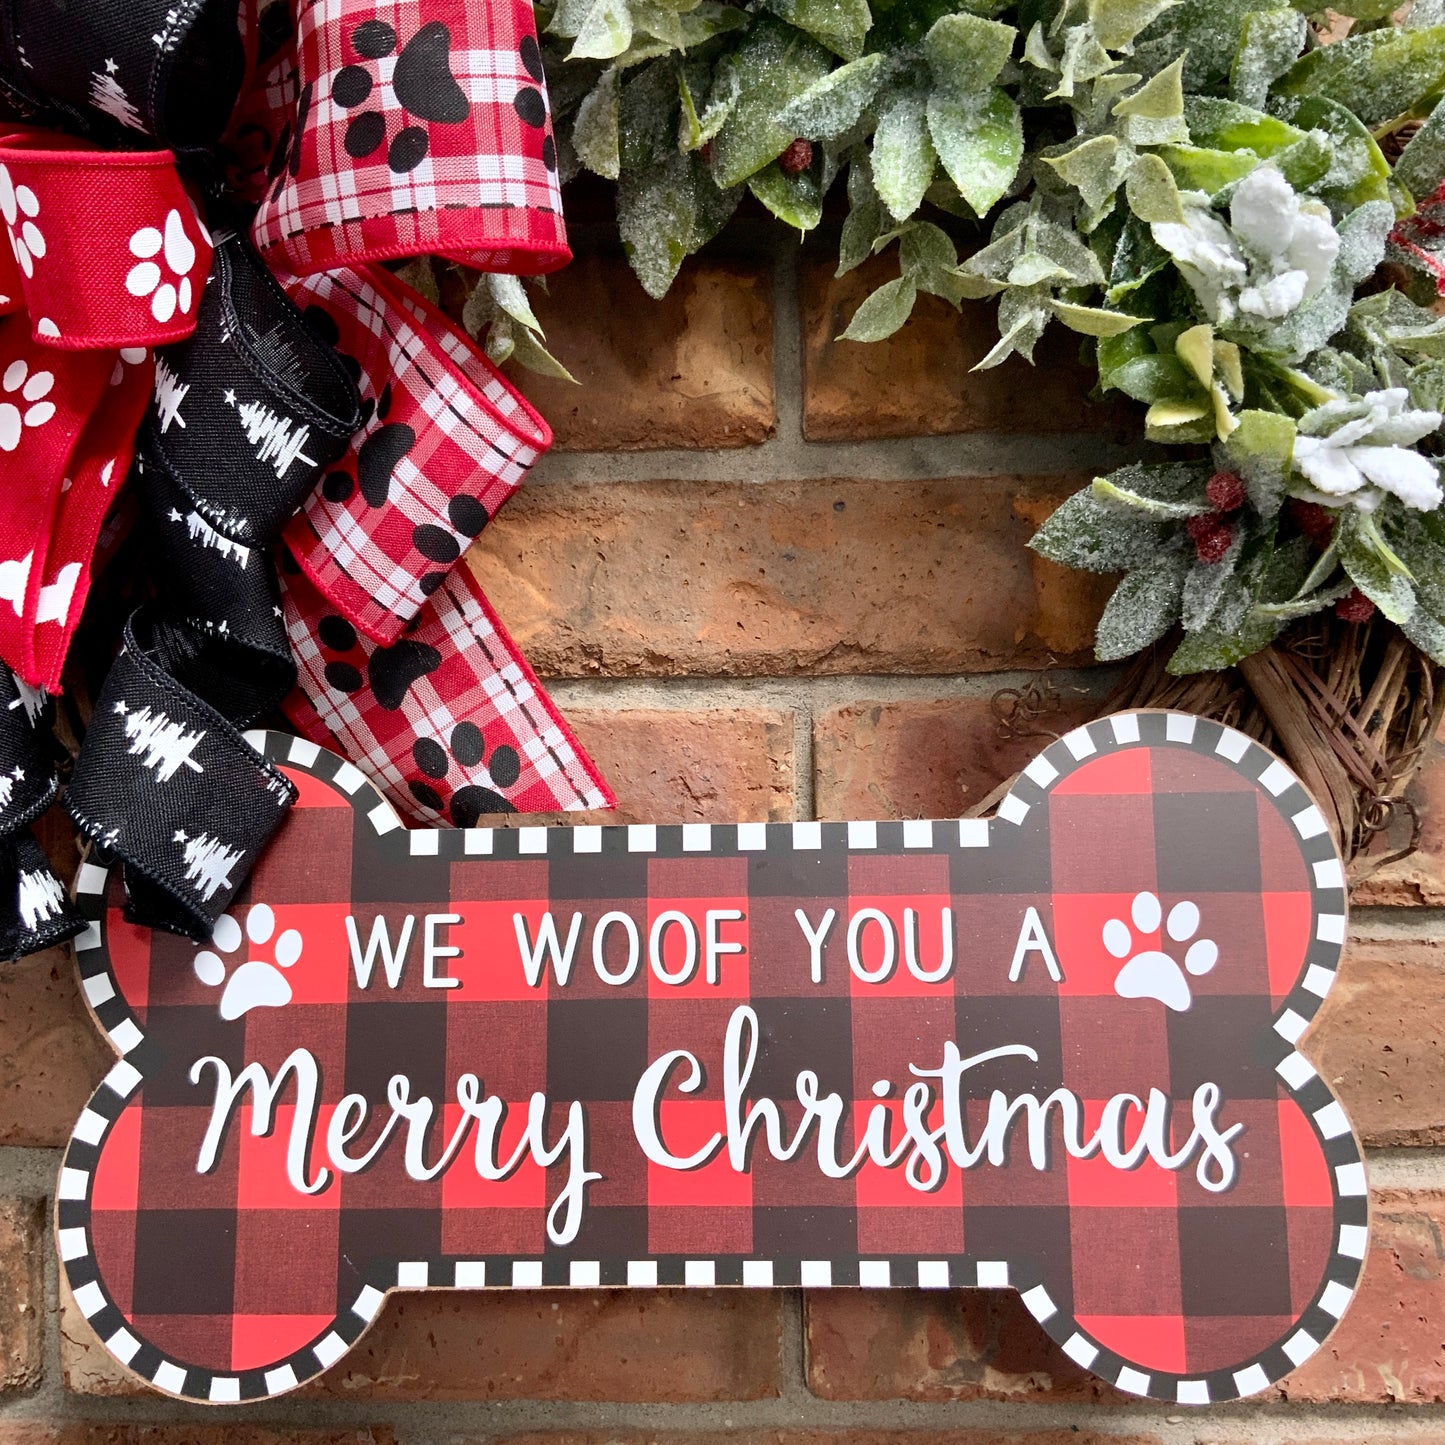 We Woof You A Merry Christmas Wreath, Christmas Dog Wreath, We Believe In Santa Paws Wreath, Christmas Dog Decor, Dog Wreath, Christmas Dog Door Hanger